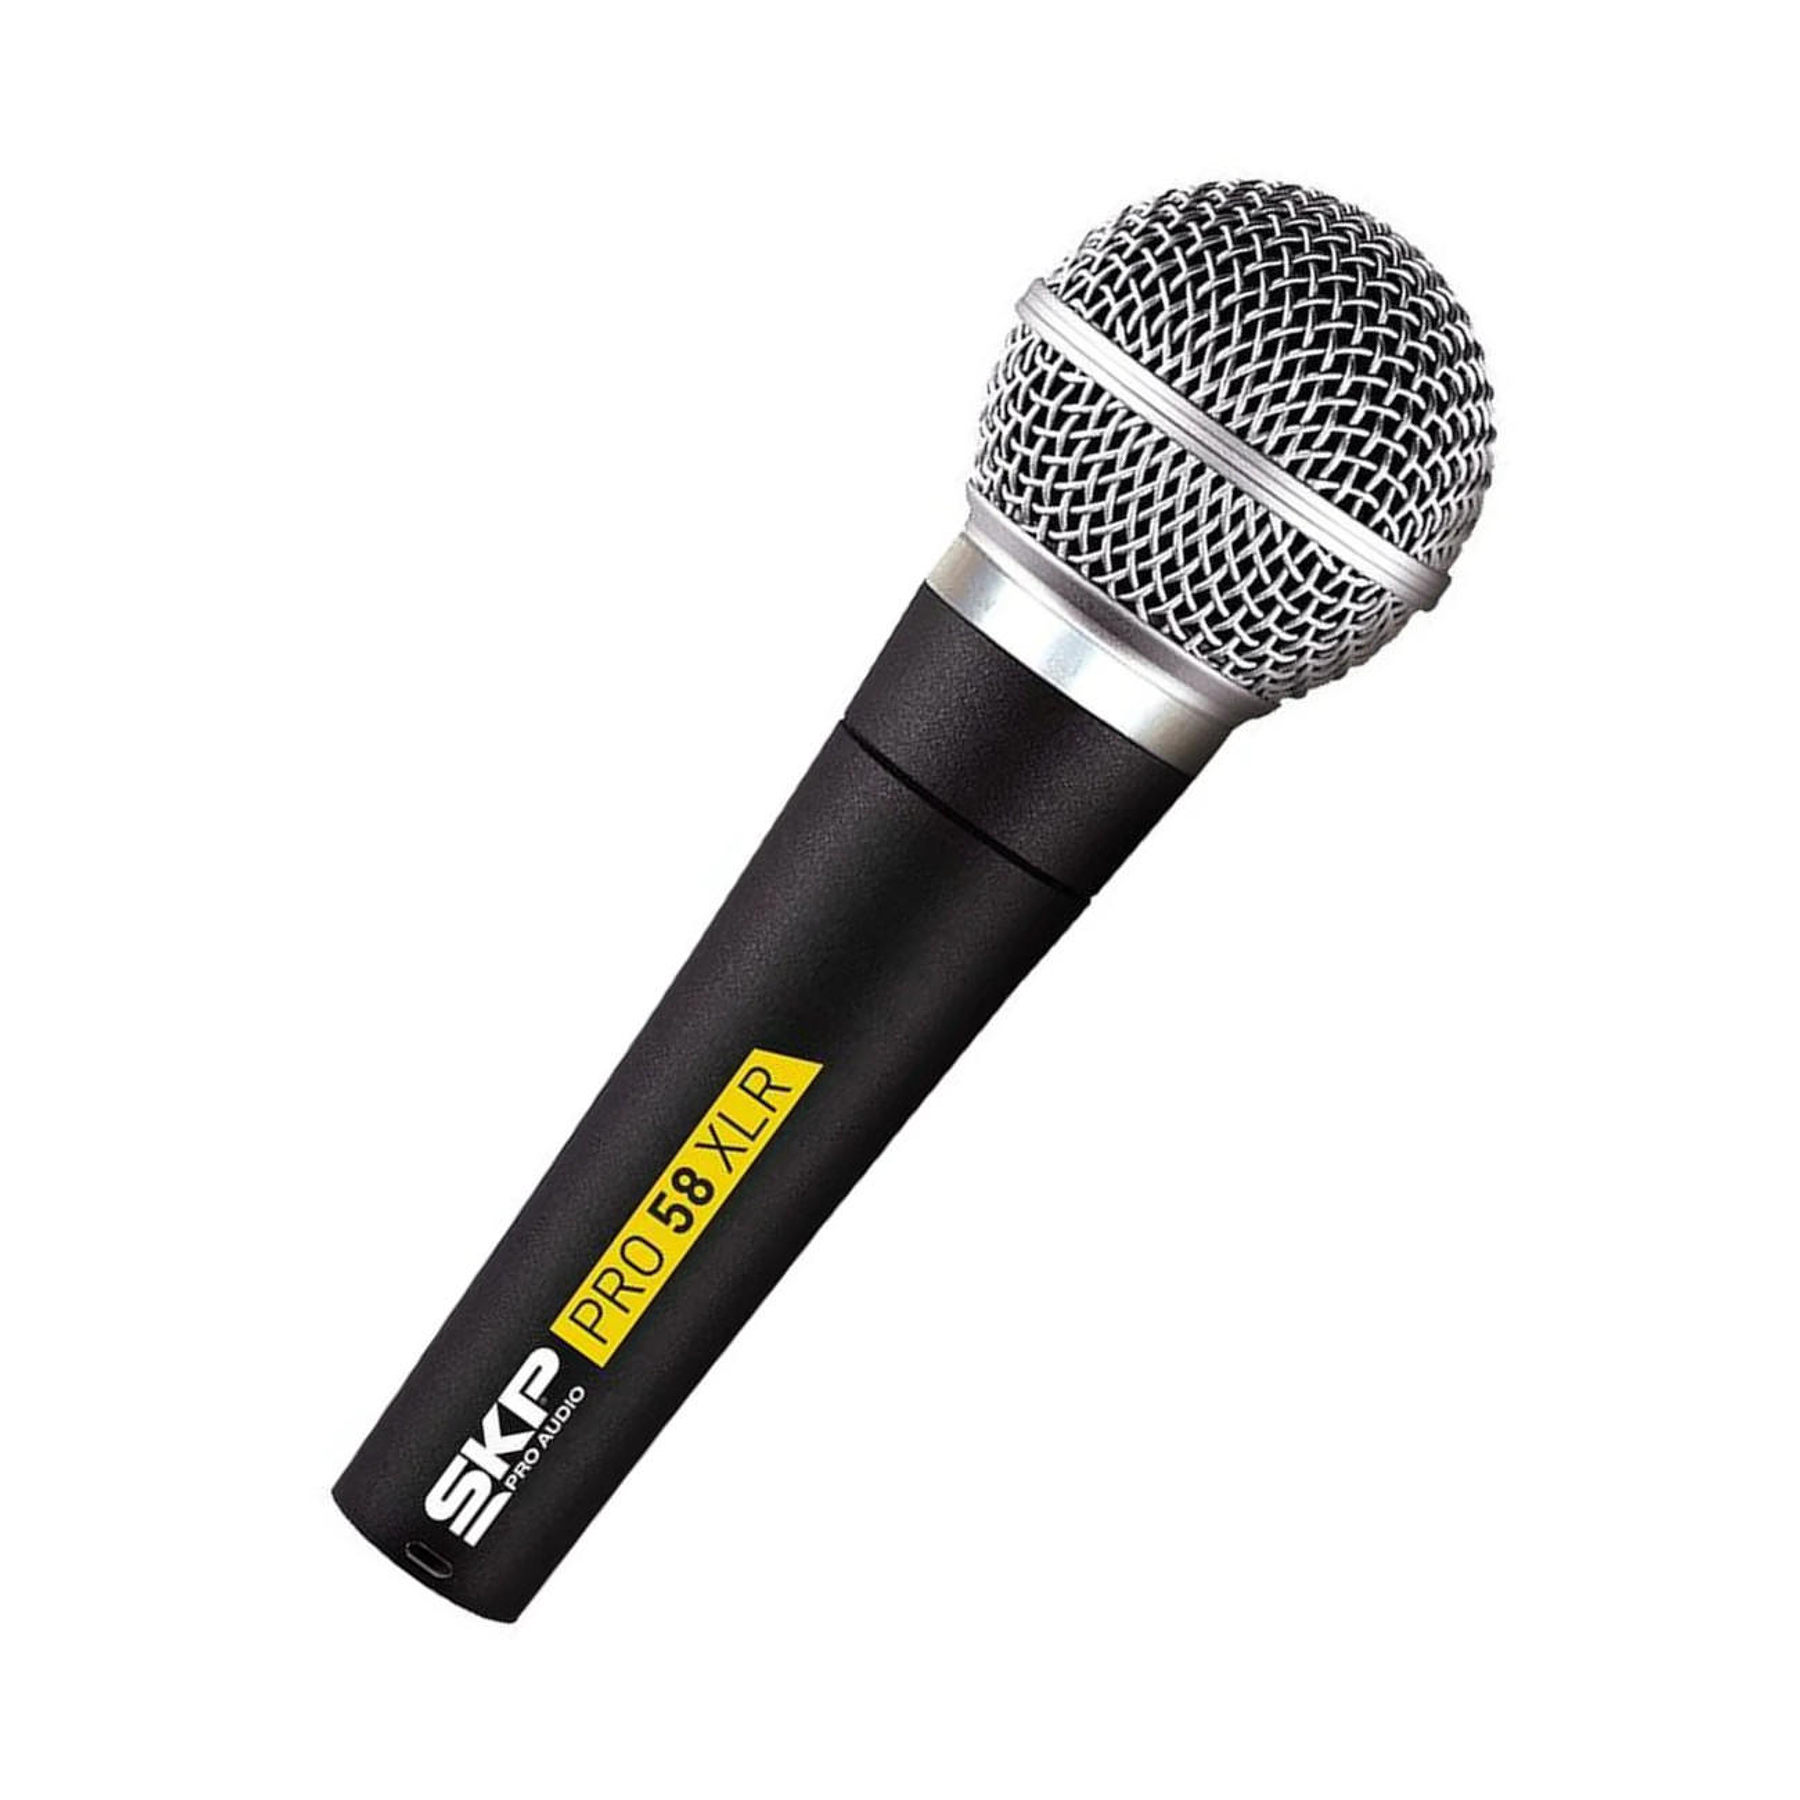 Microfono Vocal Dinamico SKP PRO-58XLR